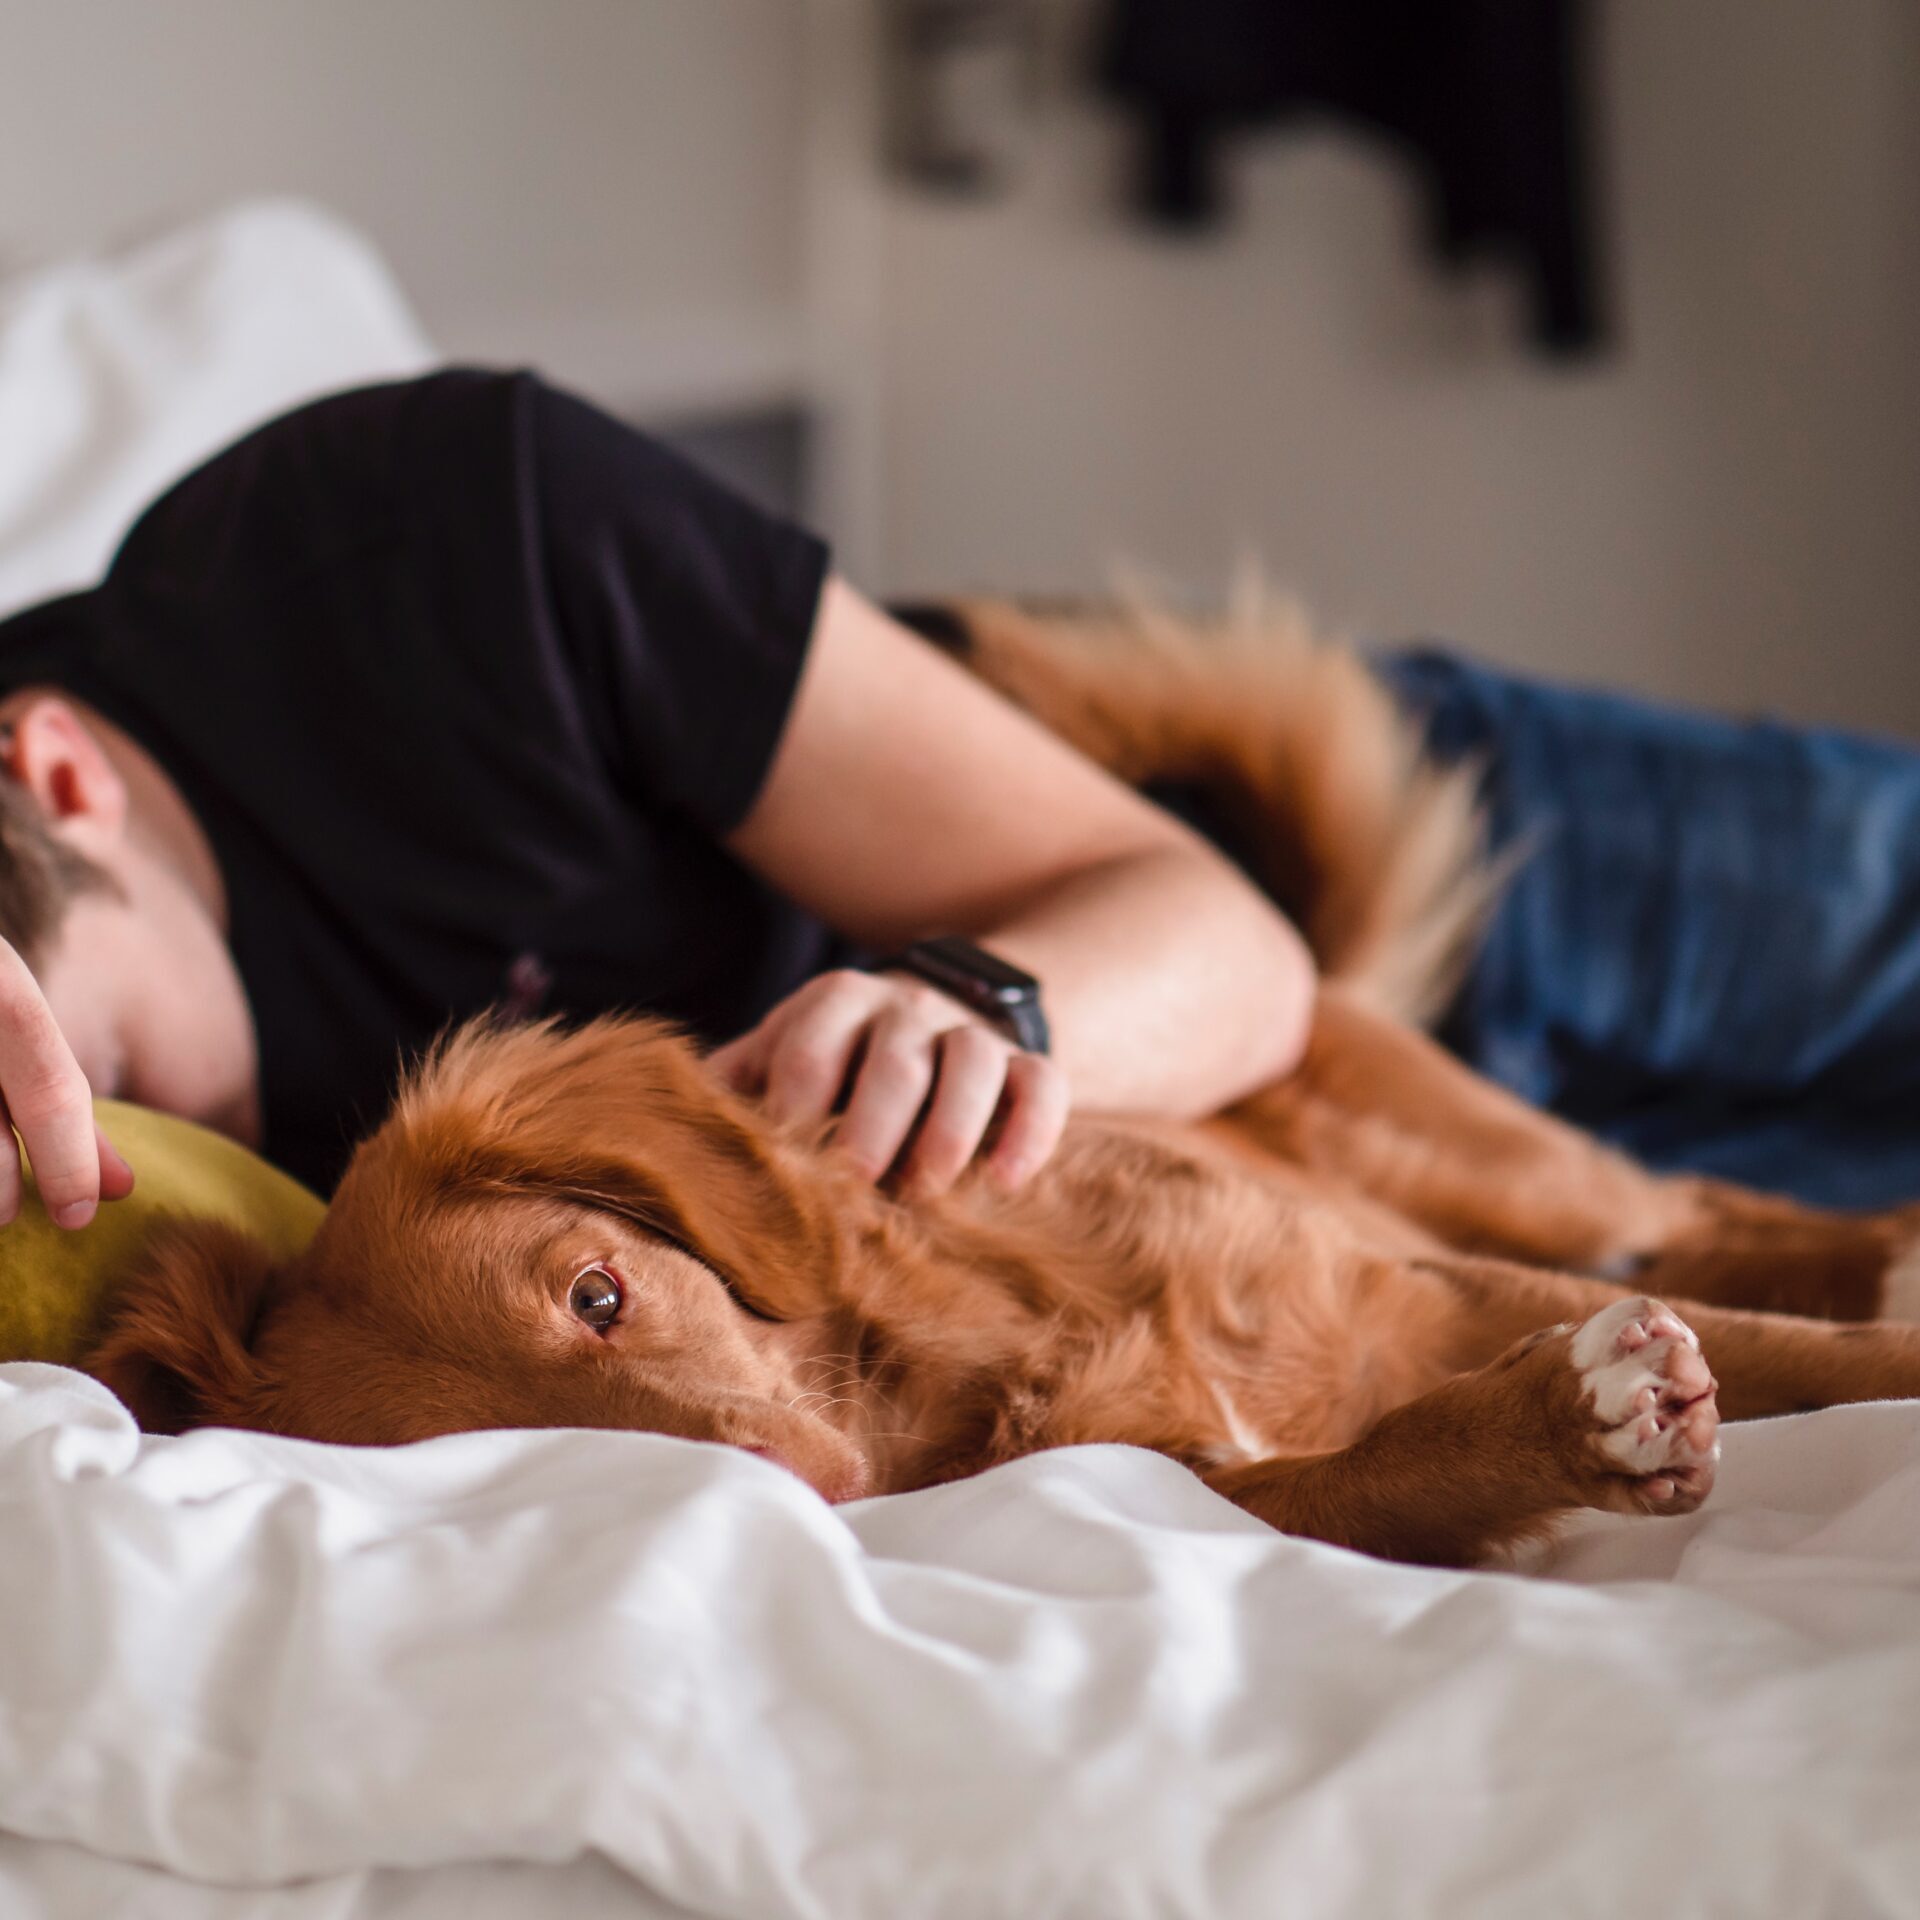 Sleepy man cuddling his dog in bed